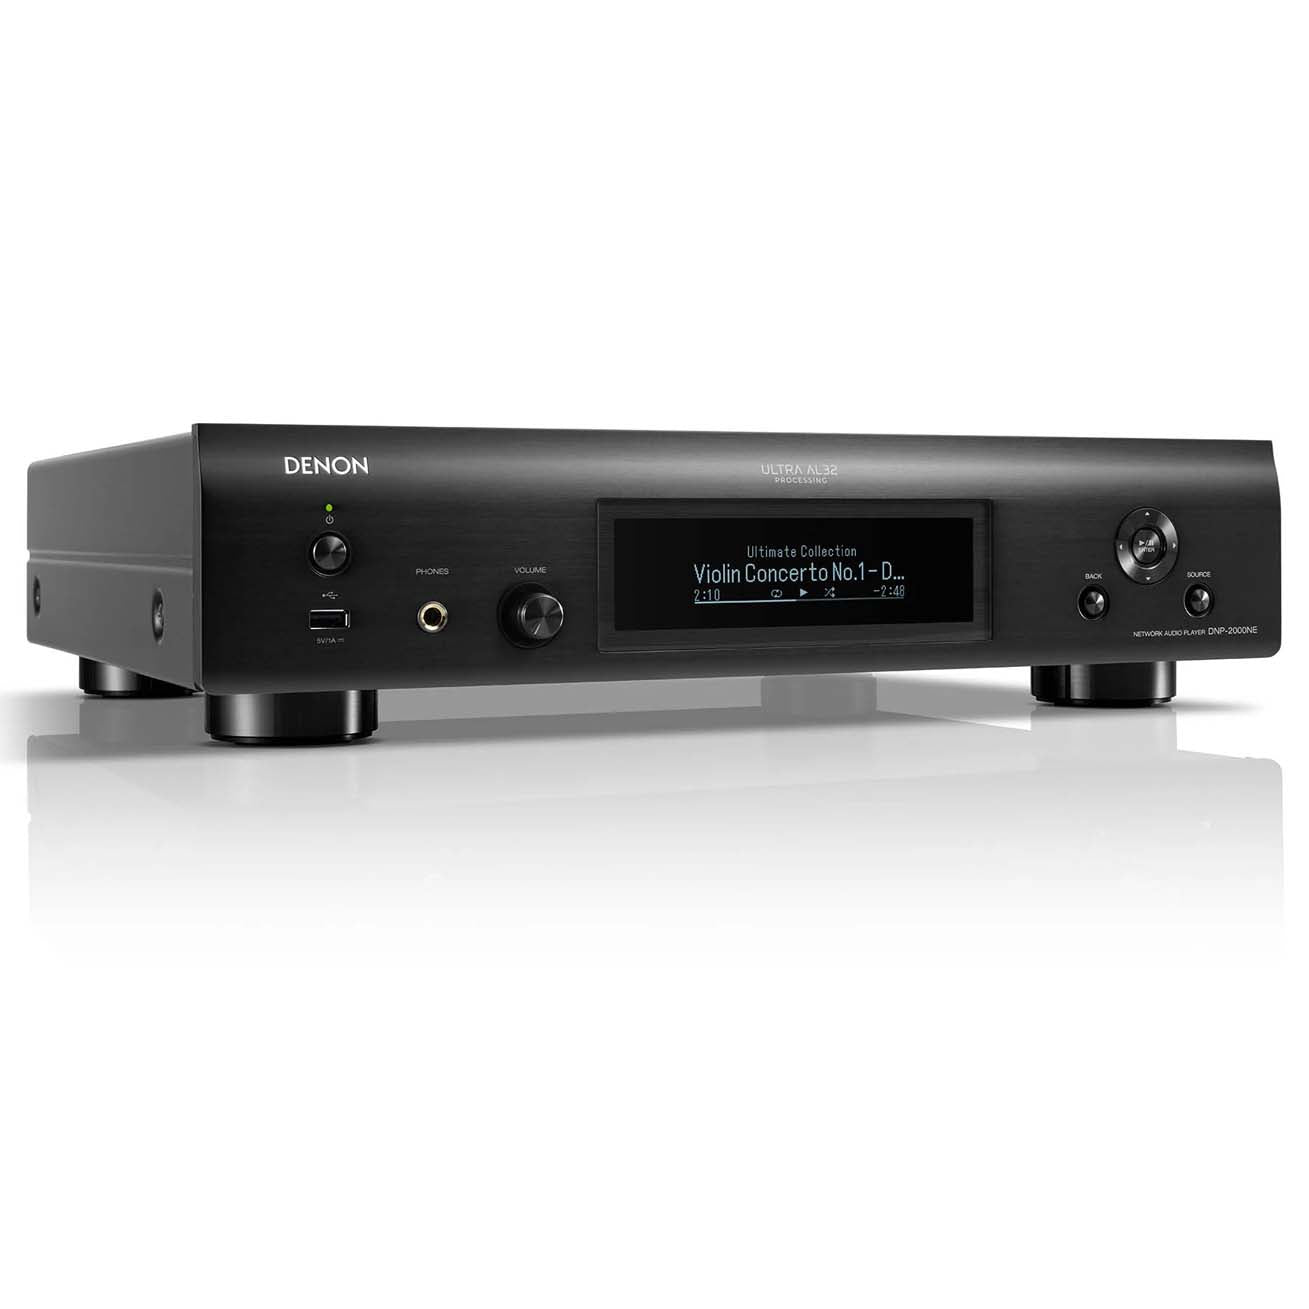 Denon DNP-2000NE Network Audio Player - Black